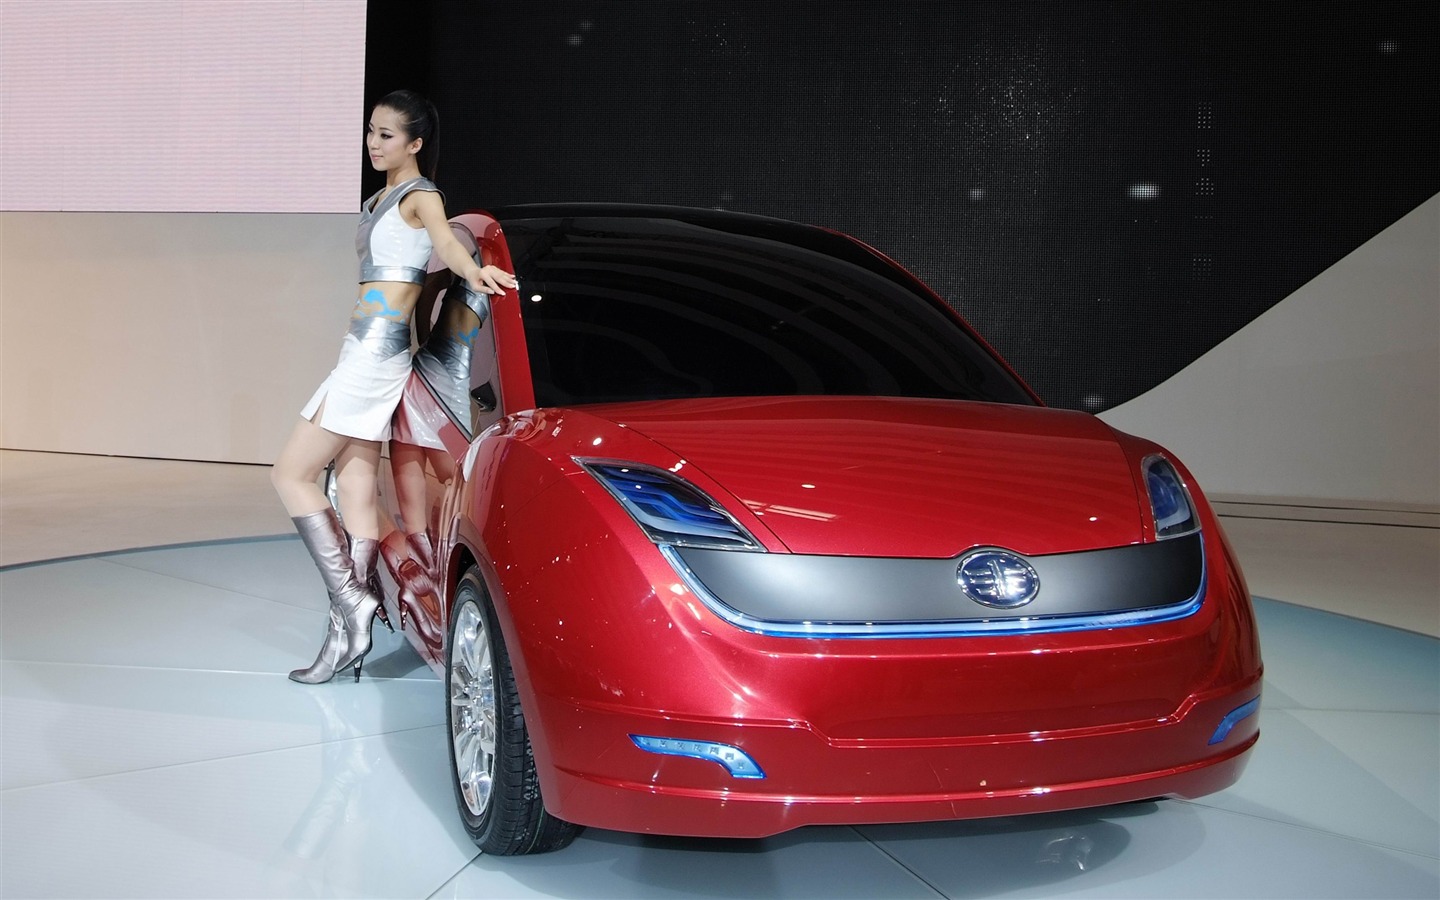 2010 Beijing International Auto Show Heung Che beauty (rebar works) #24 - 1440x900